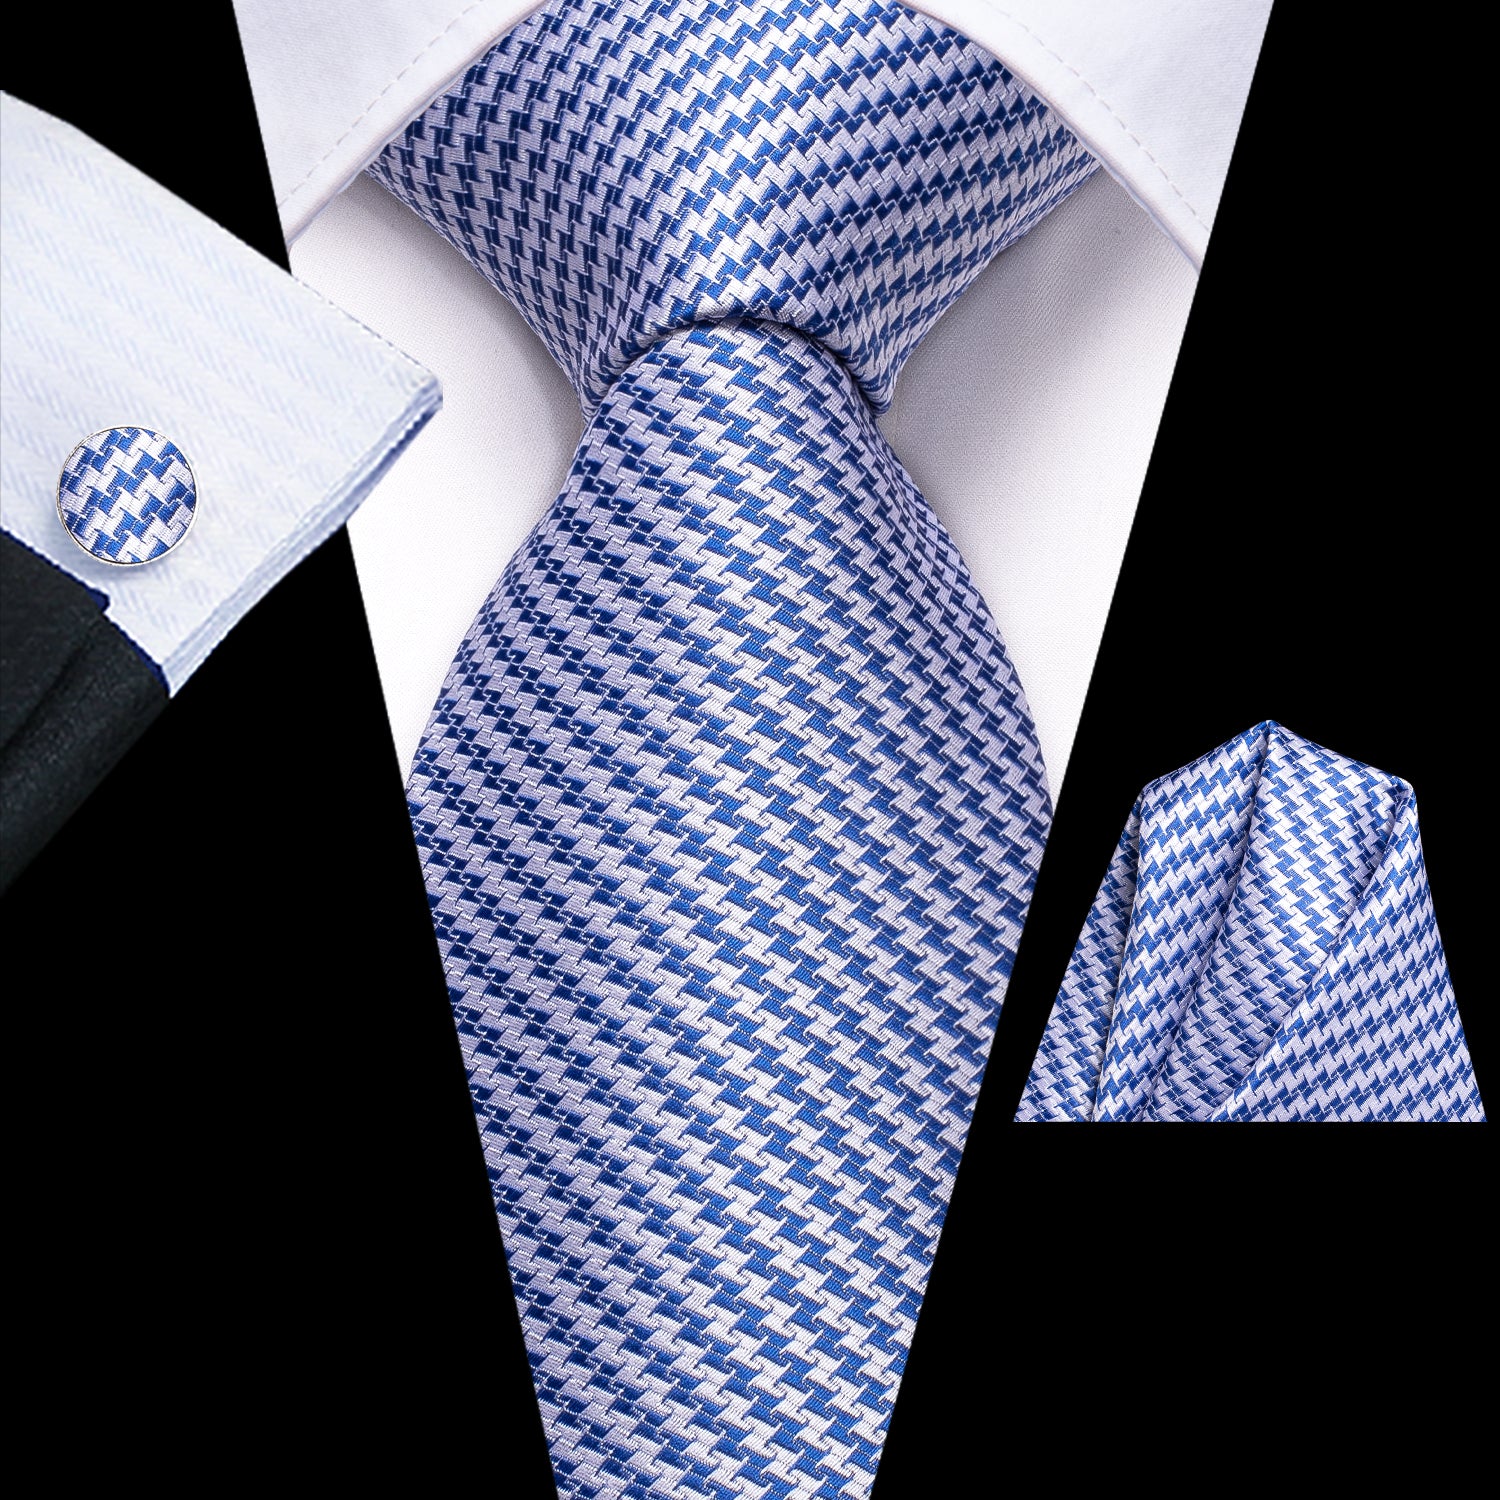 New Blue White Sawtooth Tie Pocket Square Cufflinks Set